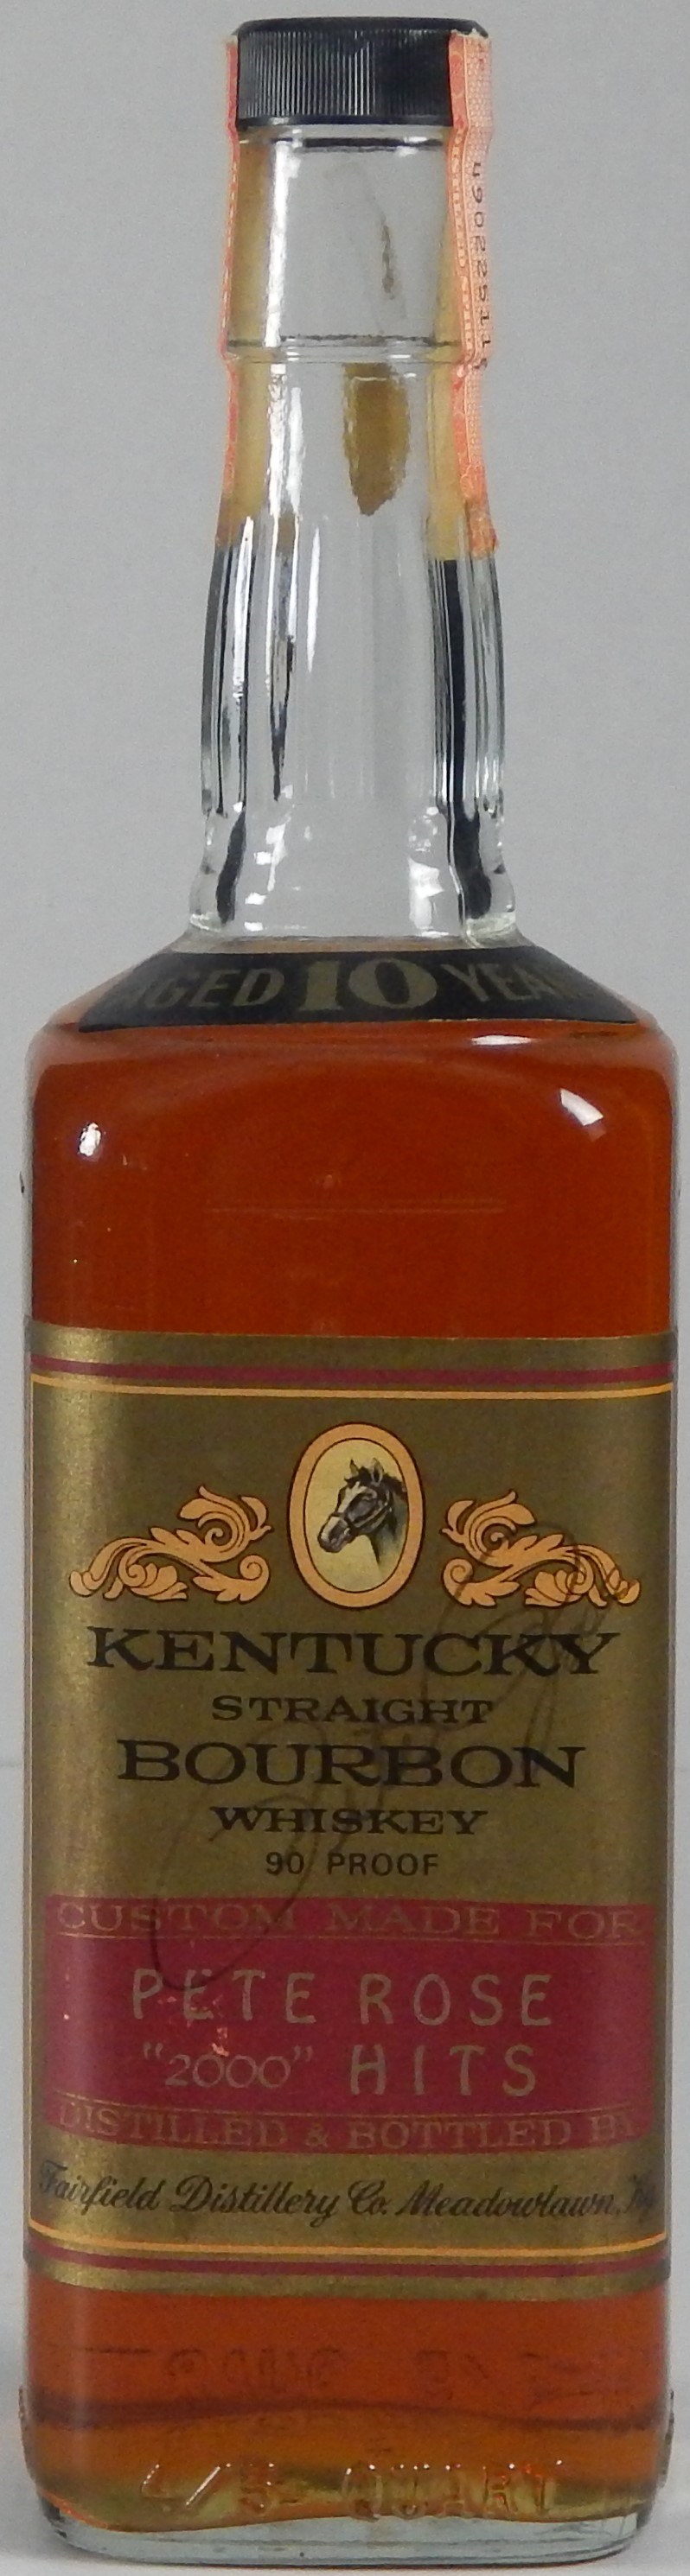 - Pete Rose 2000th Hit Bourbon Whiskey Bottle.  Very Rare.